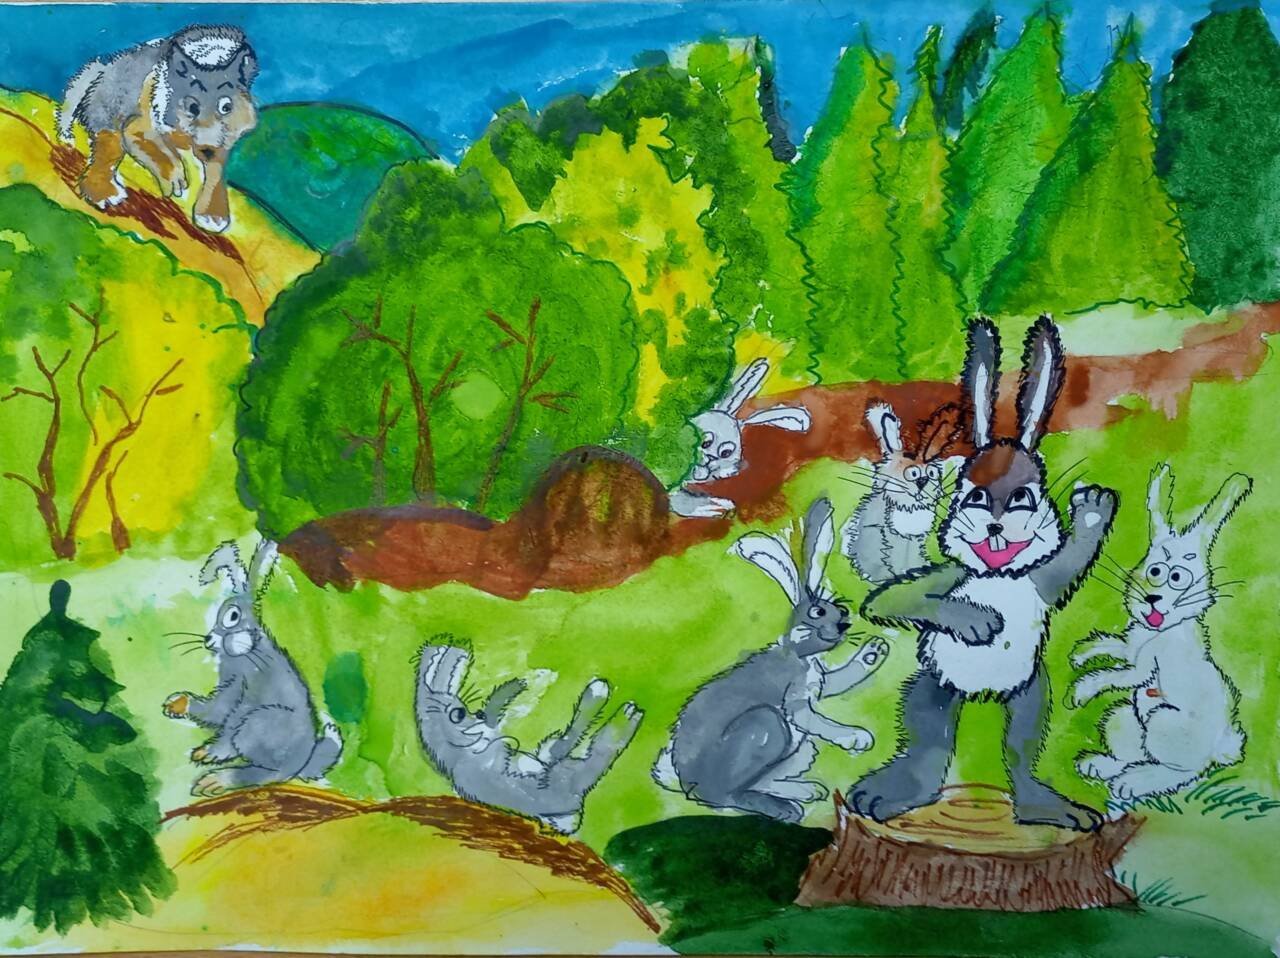 Храброго зайца падеж. Храбрый заяц рисунок. Сказка про храброго зайца. Сказка про храброго зайца - длинные уши, косые глаза, короткий хвост.